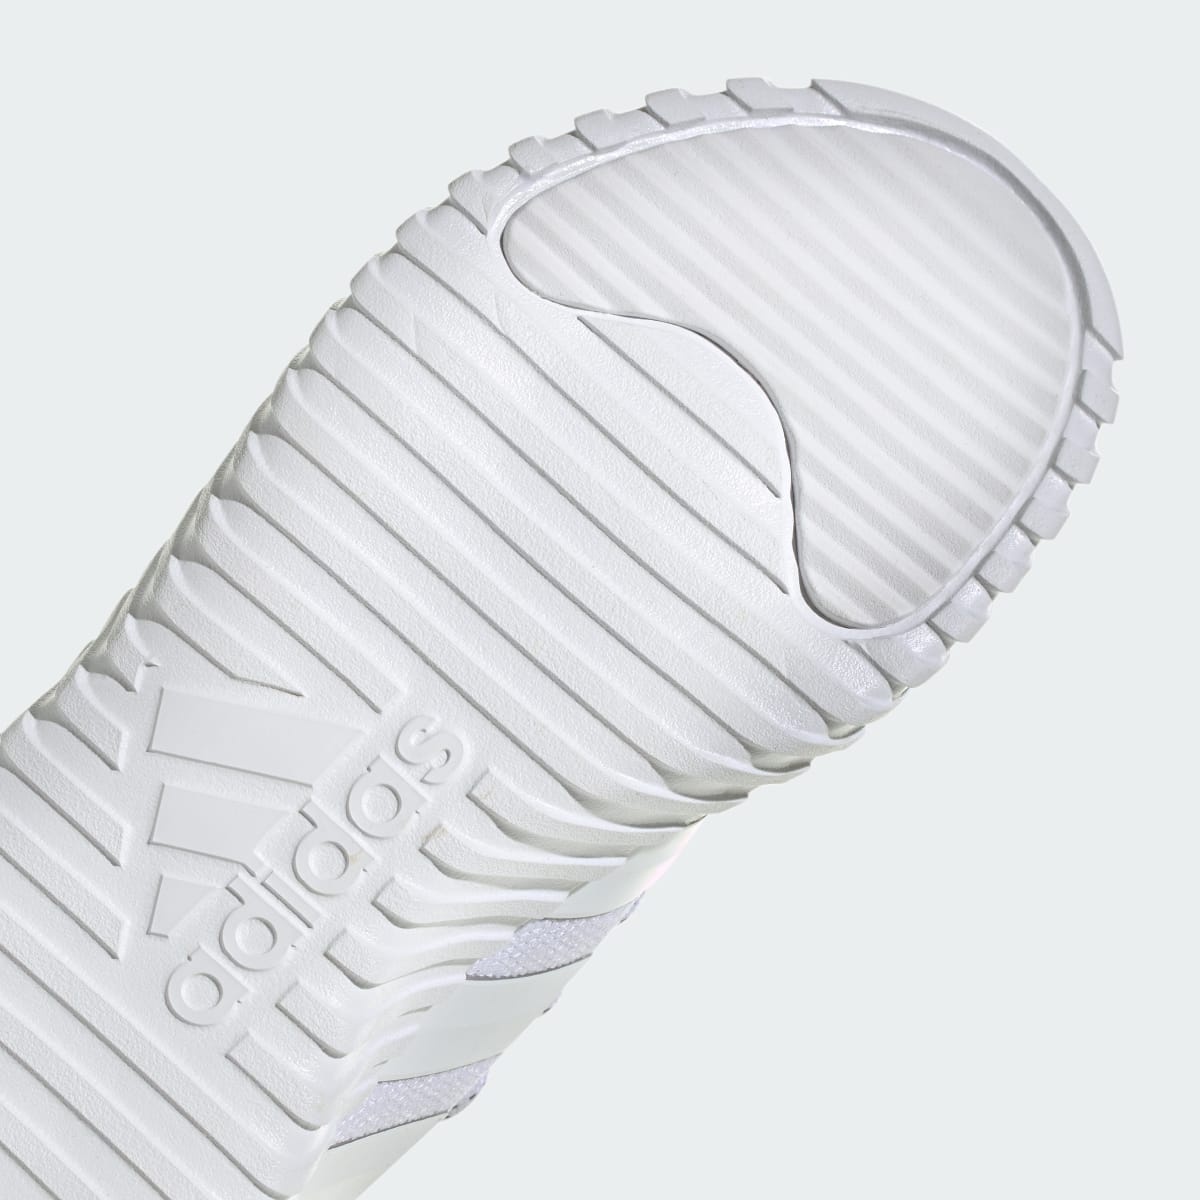 Adidas Kaptir 3.0 Shoes. 8